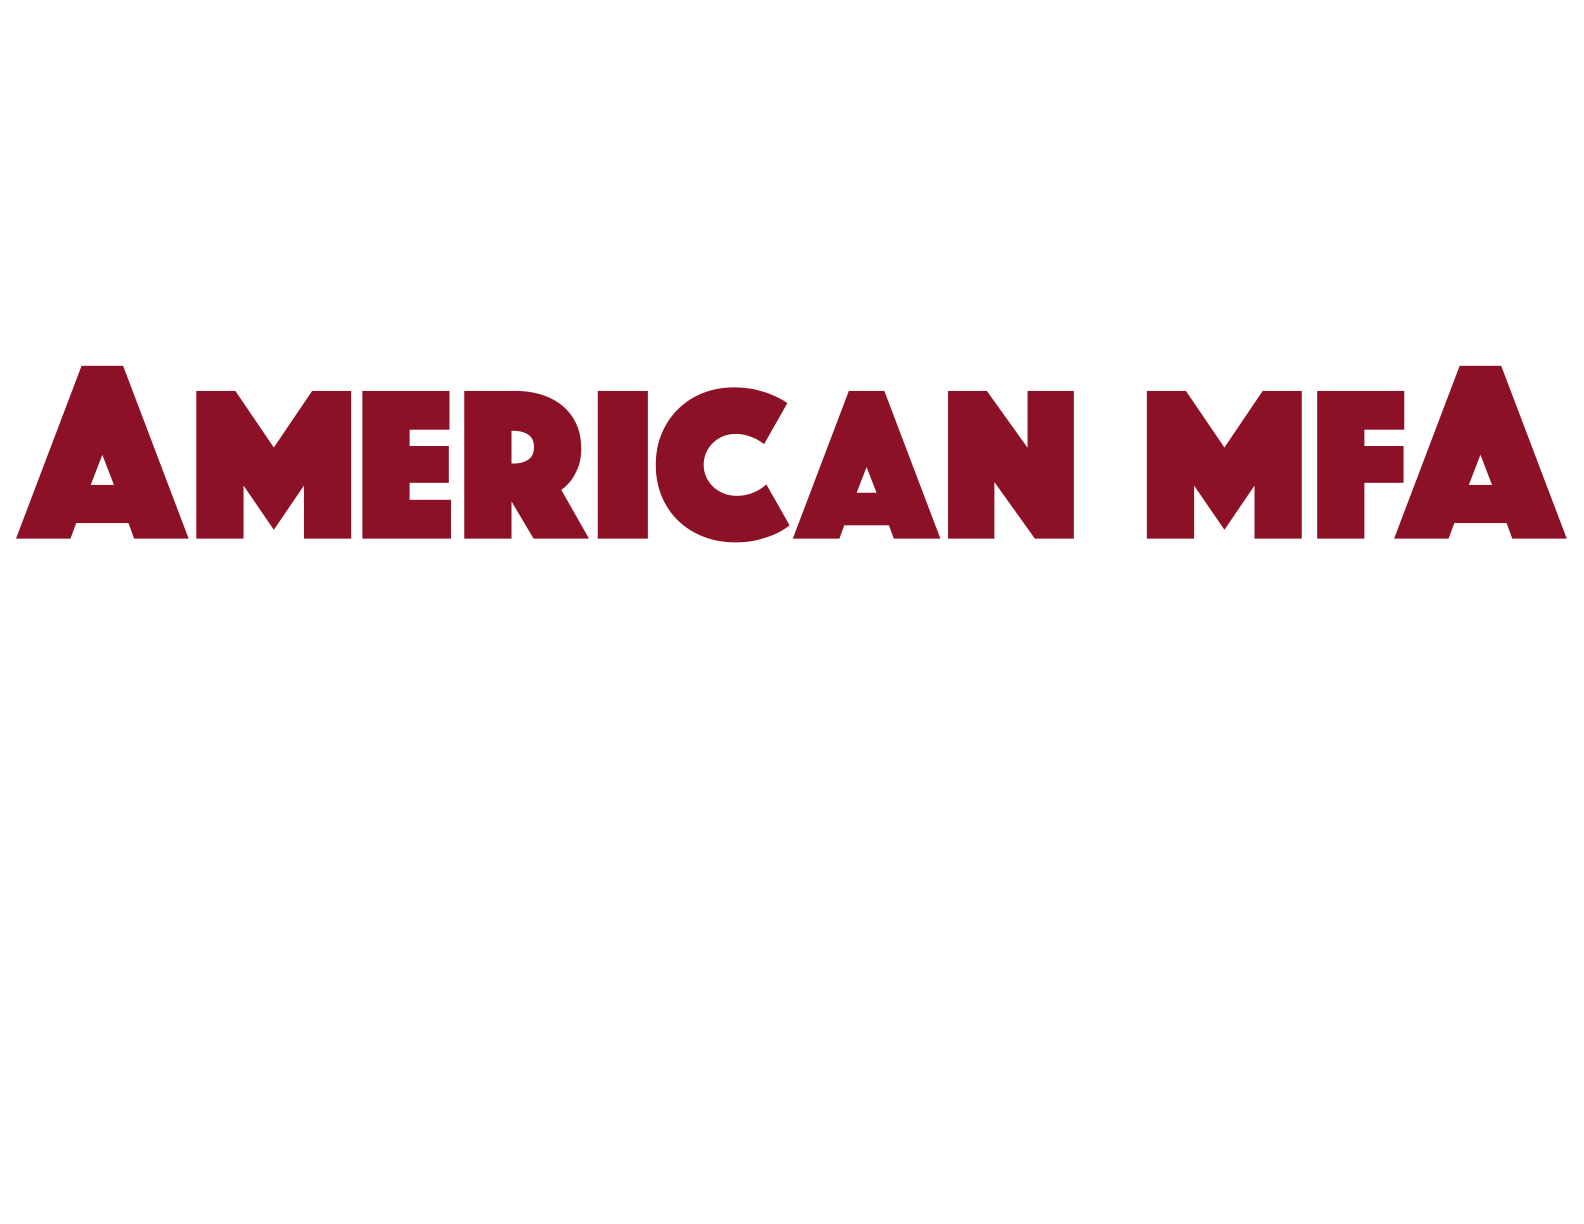 American MFA Wordmark